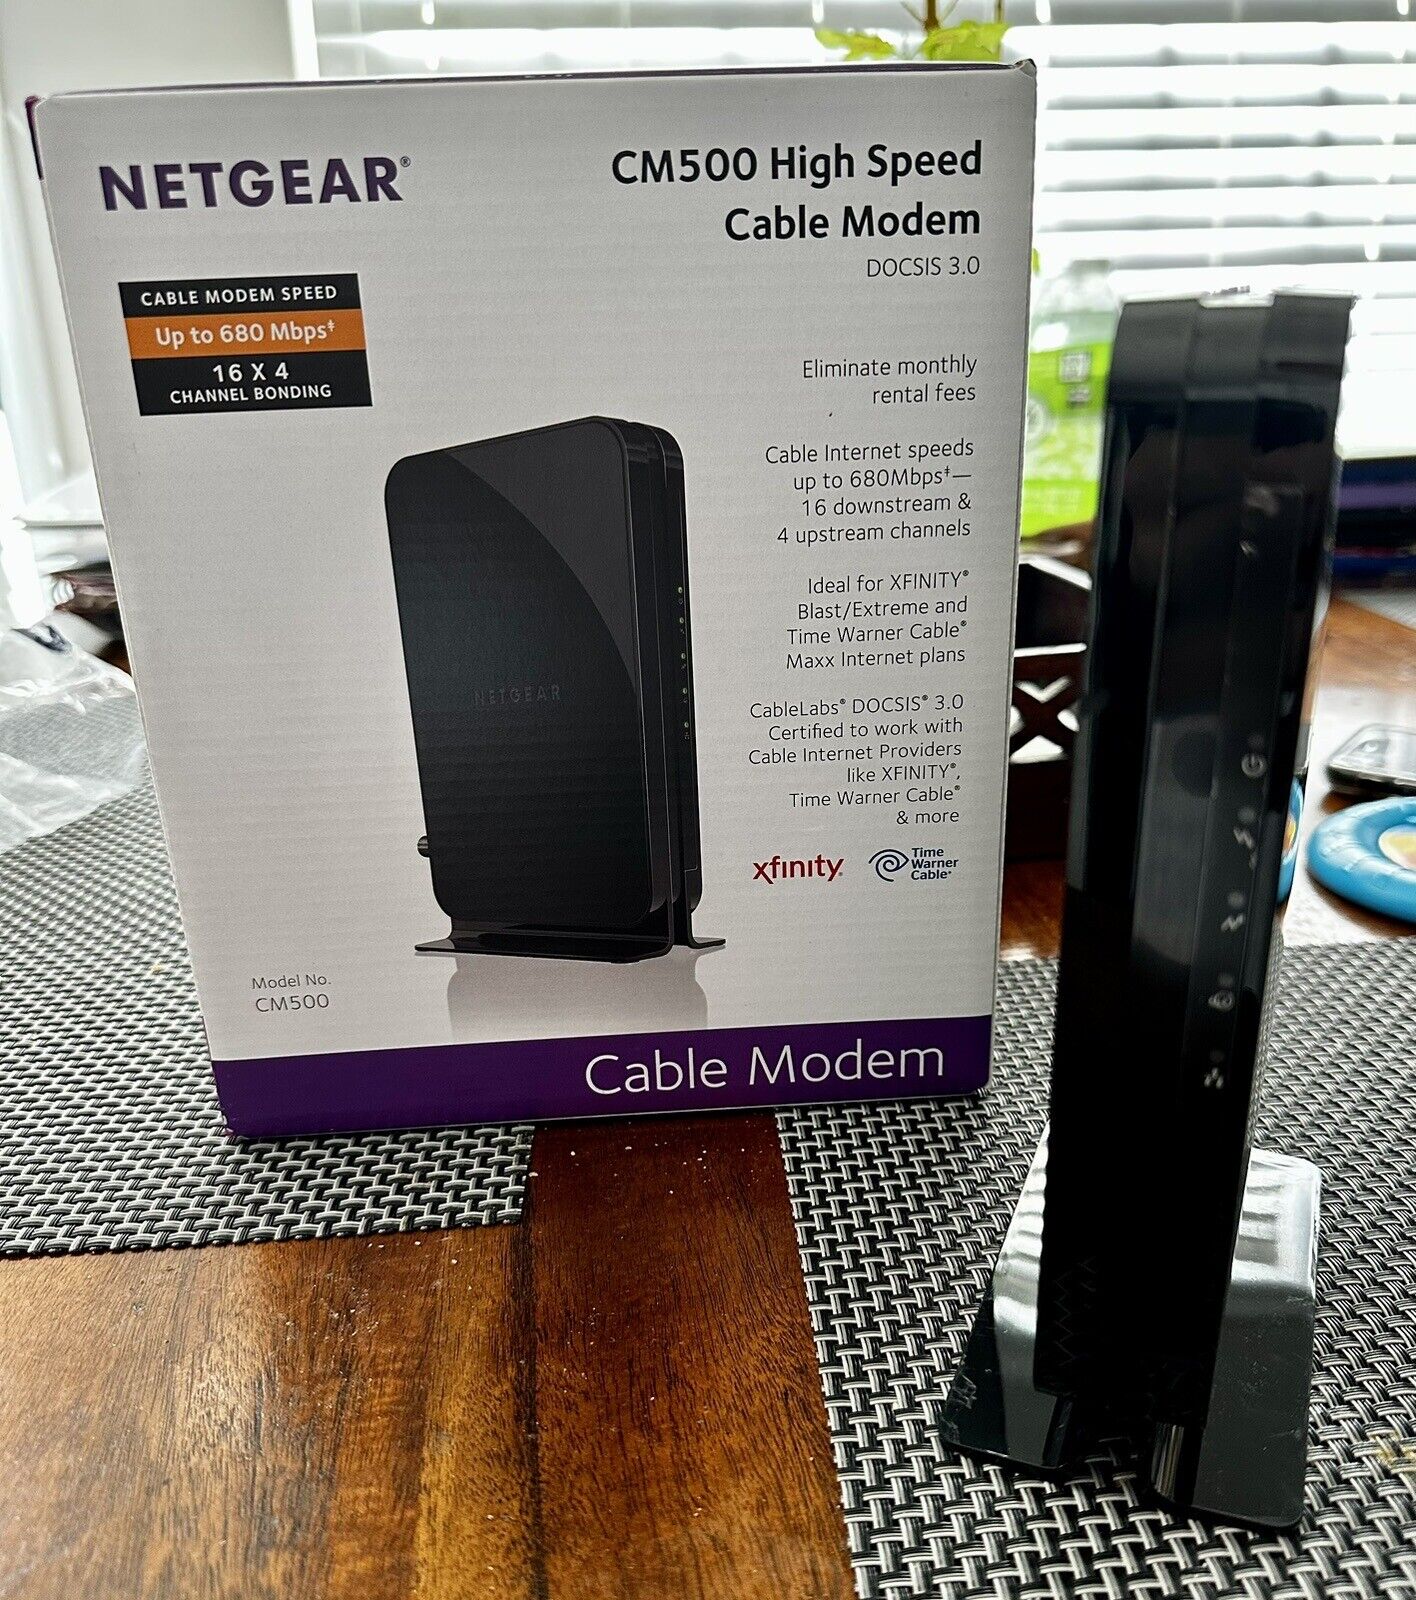 Netgear CM500 High Speed Cable Modem DOCSIS 3.0